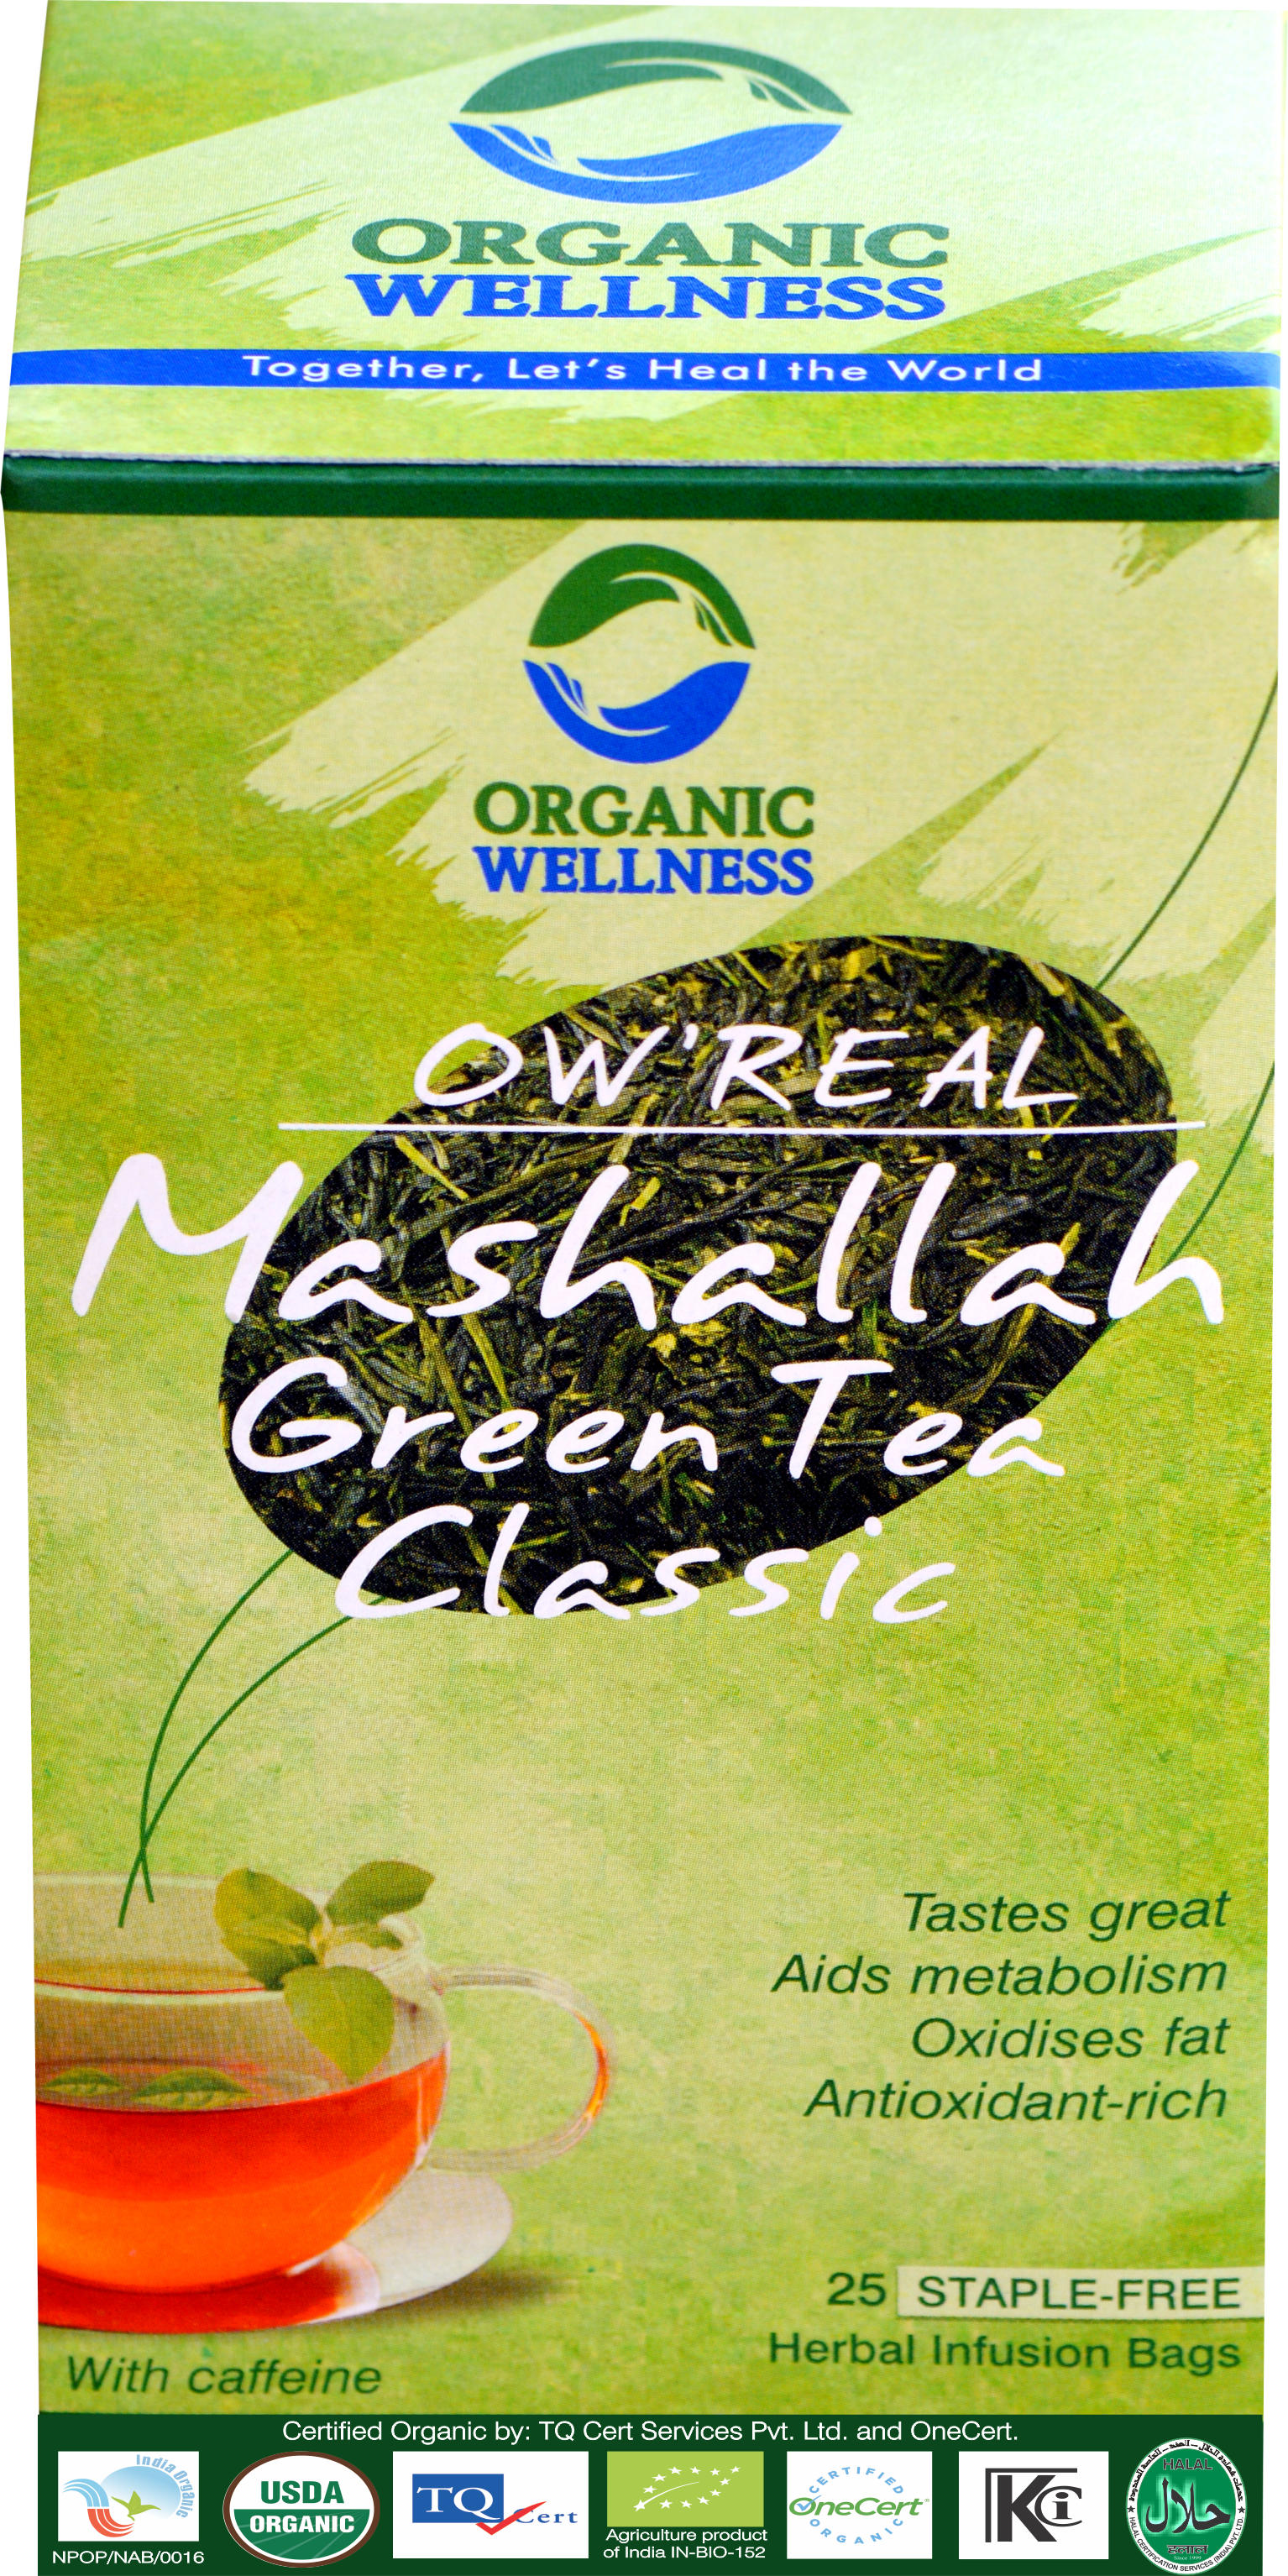 Buy Organic Wellness Real Mashalla Green Tea Classic at Best Price Online